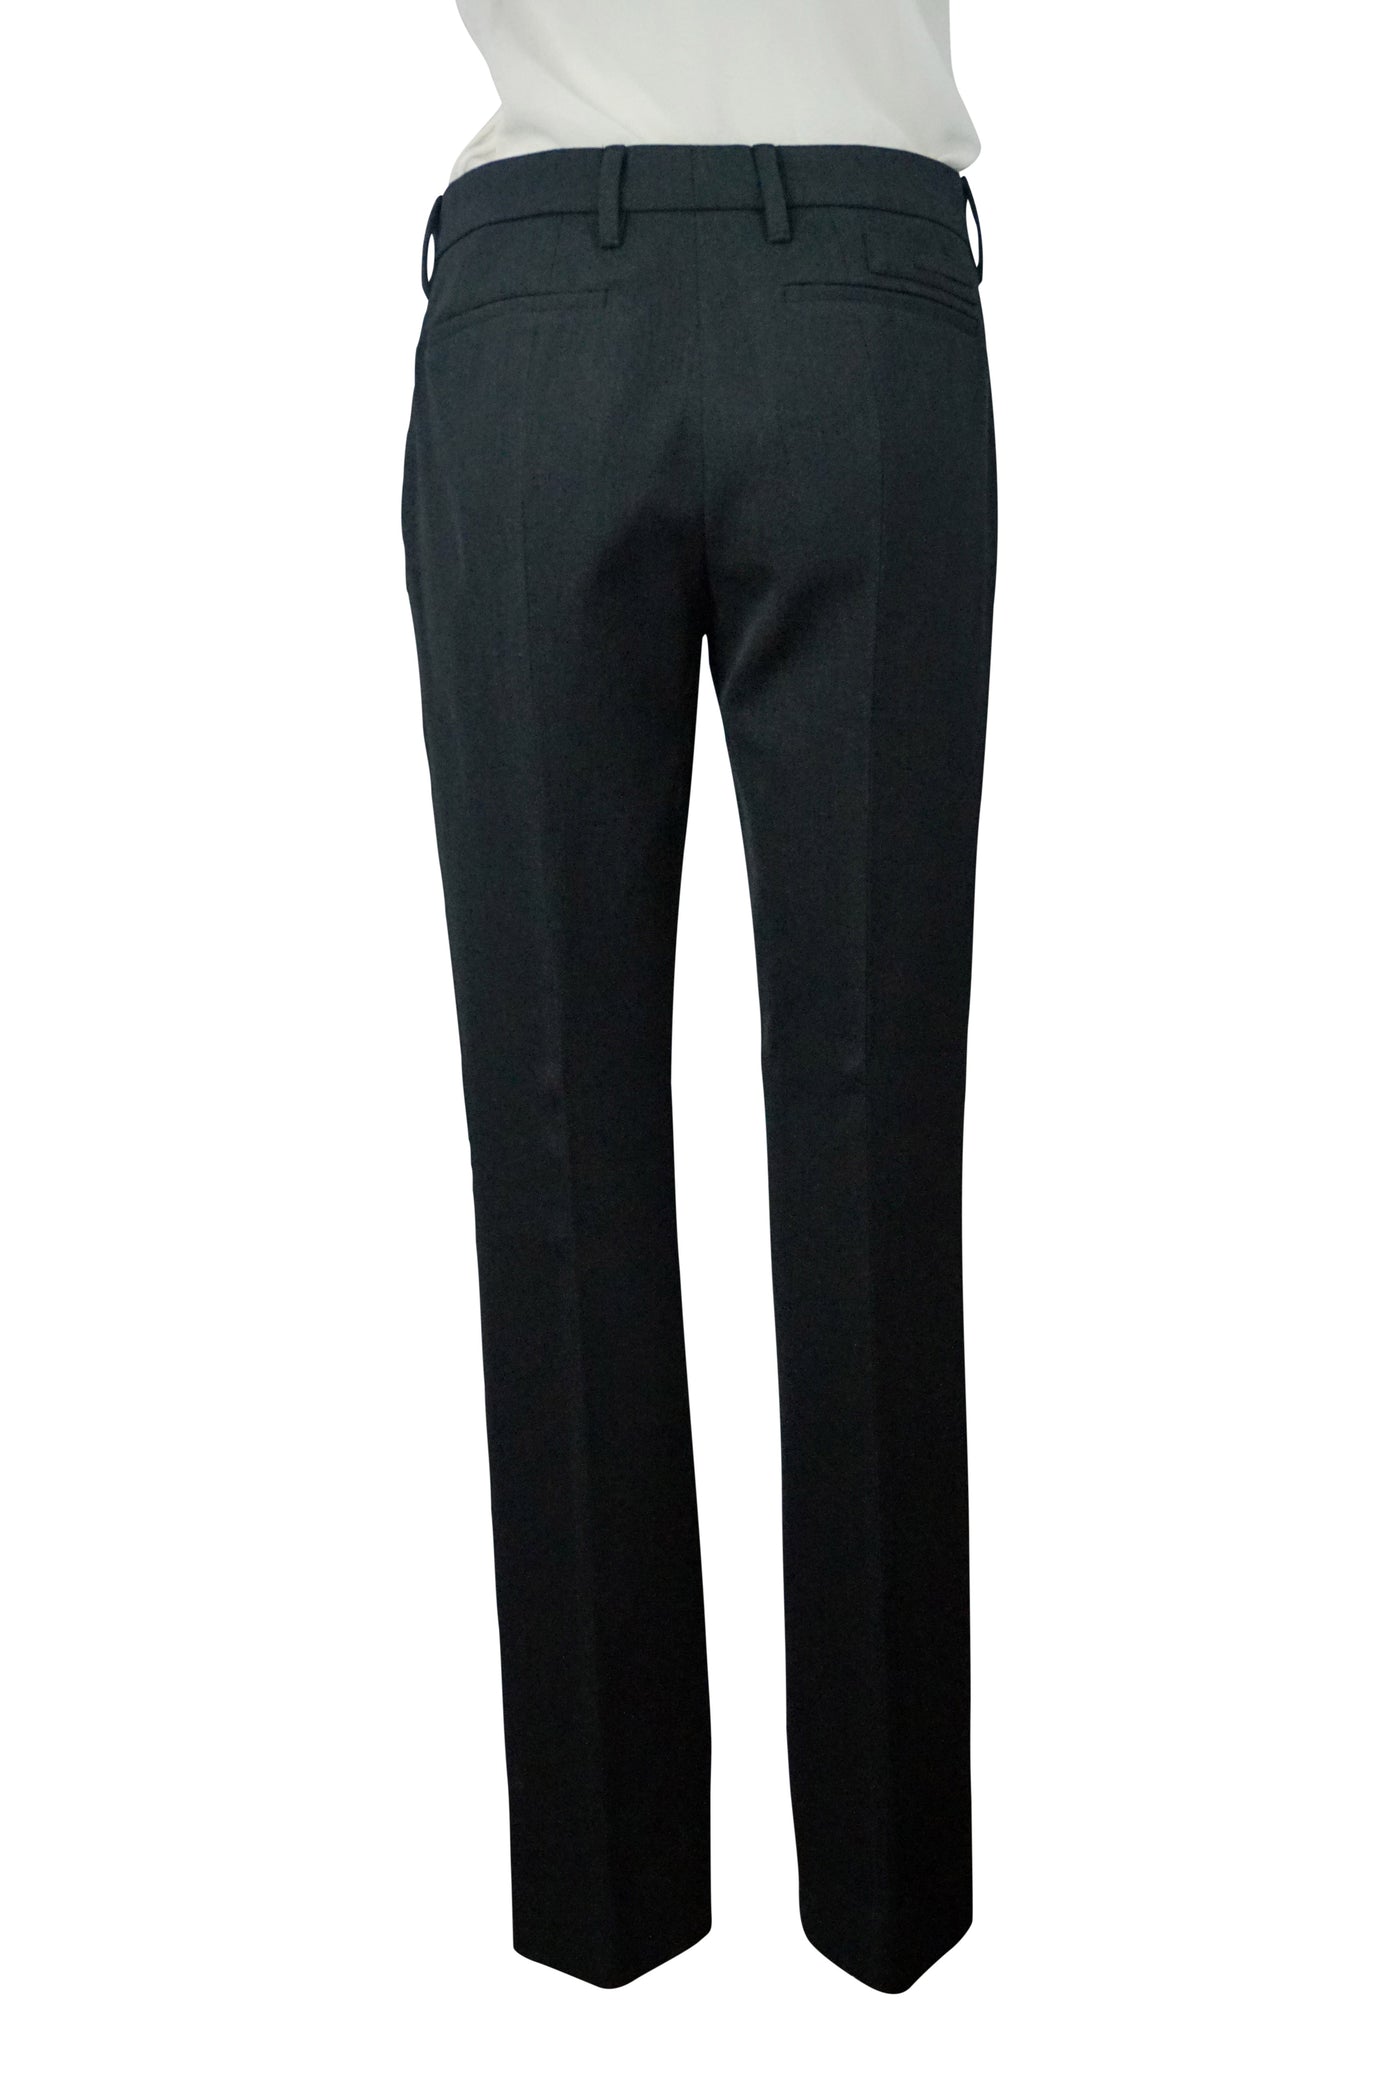 Black stretch wool dress pants  (unhemmed)